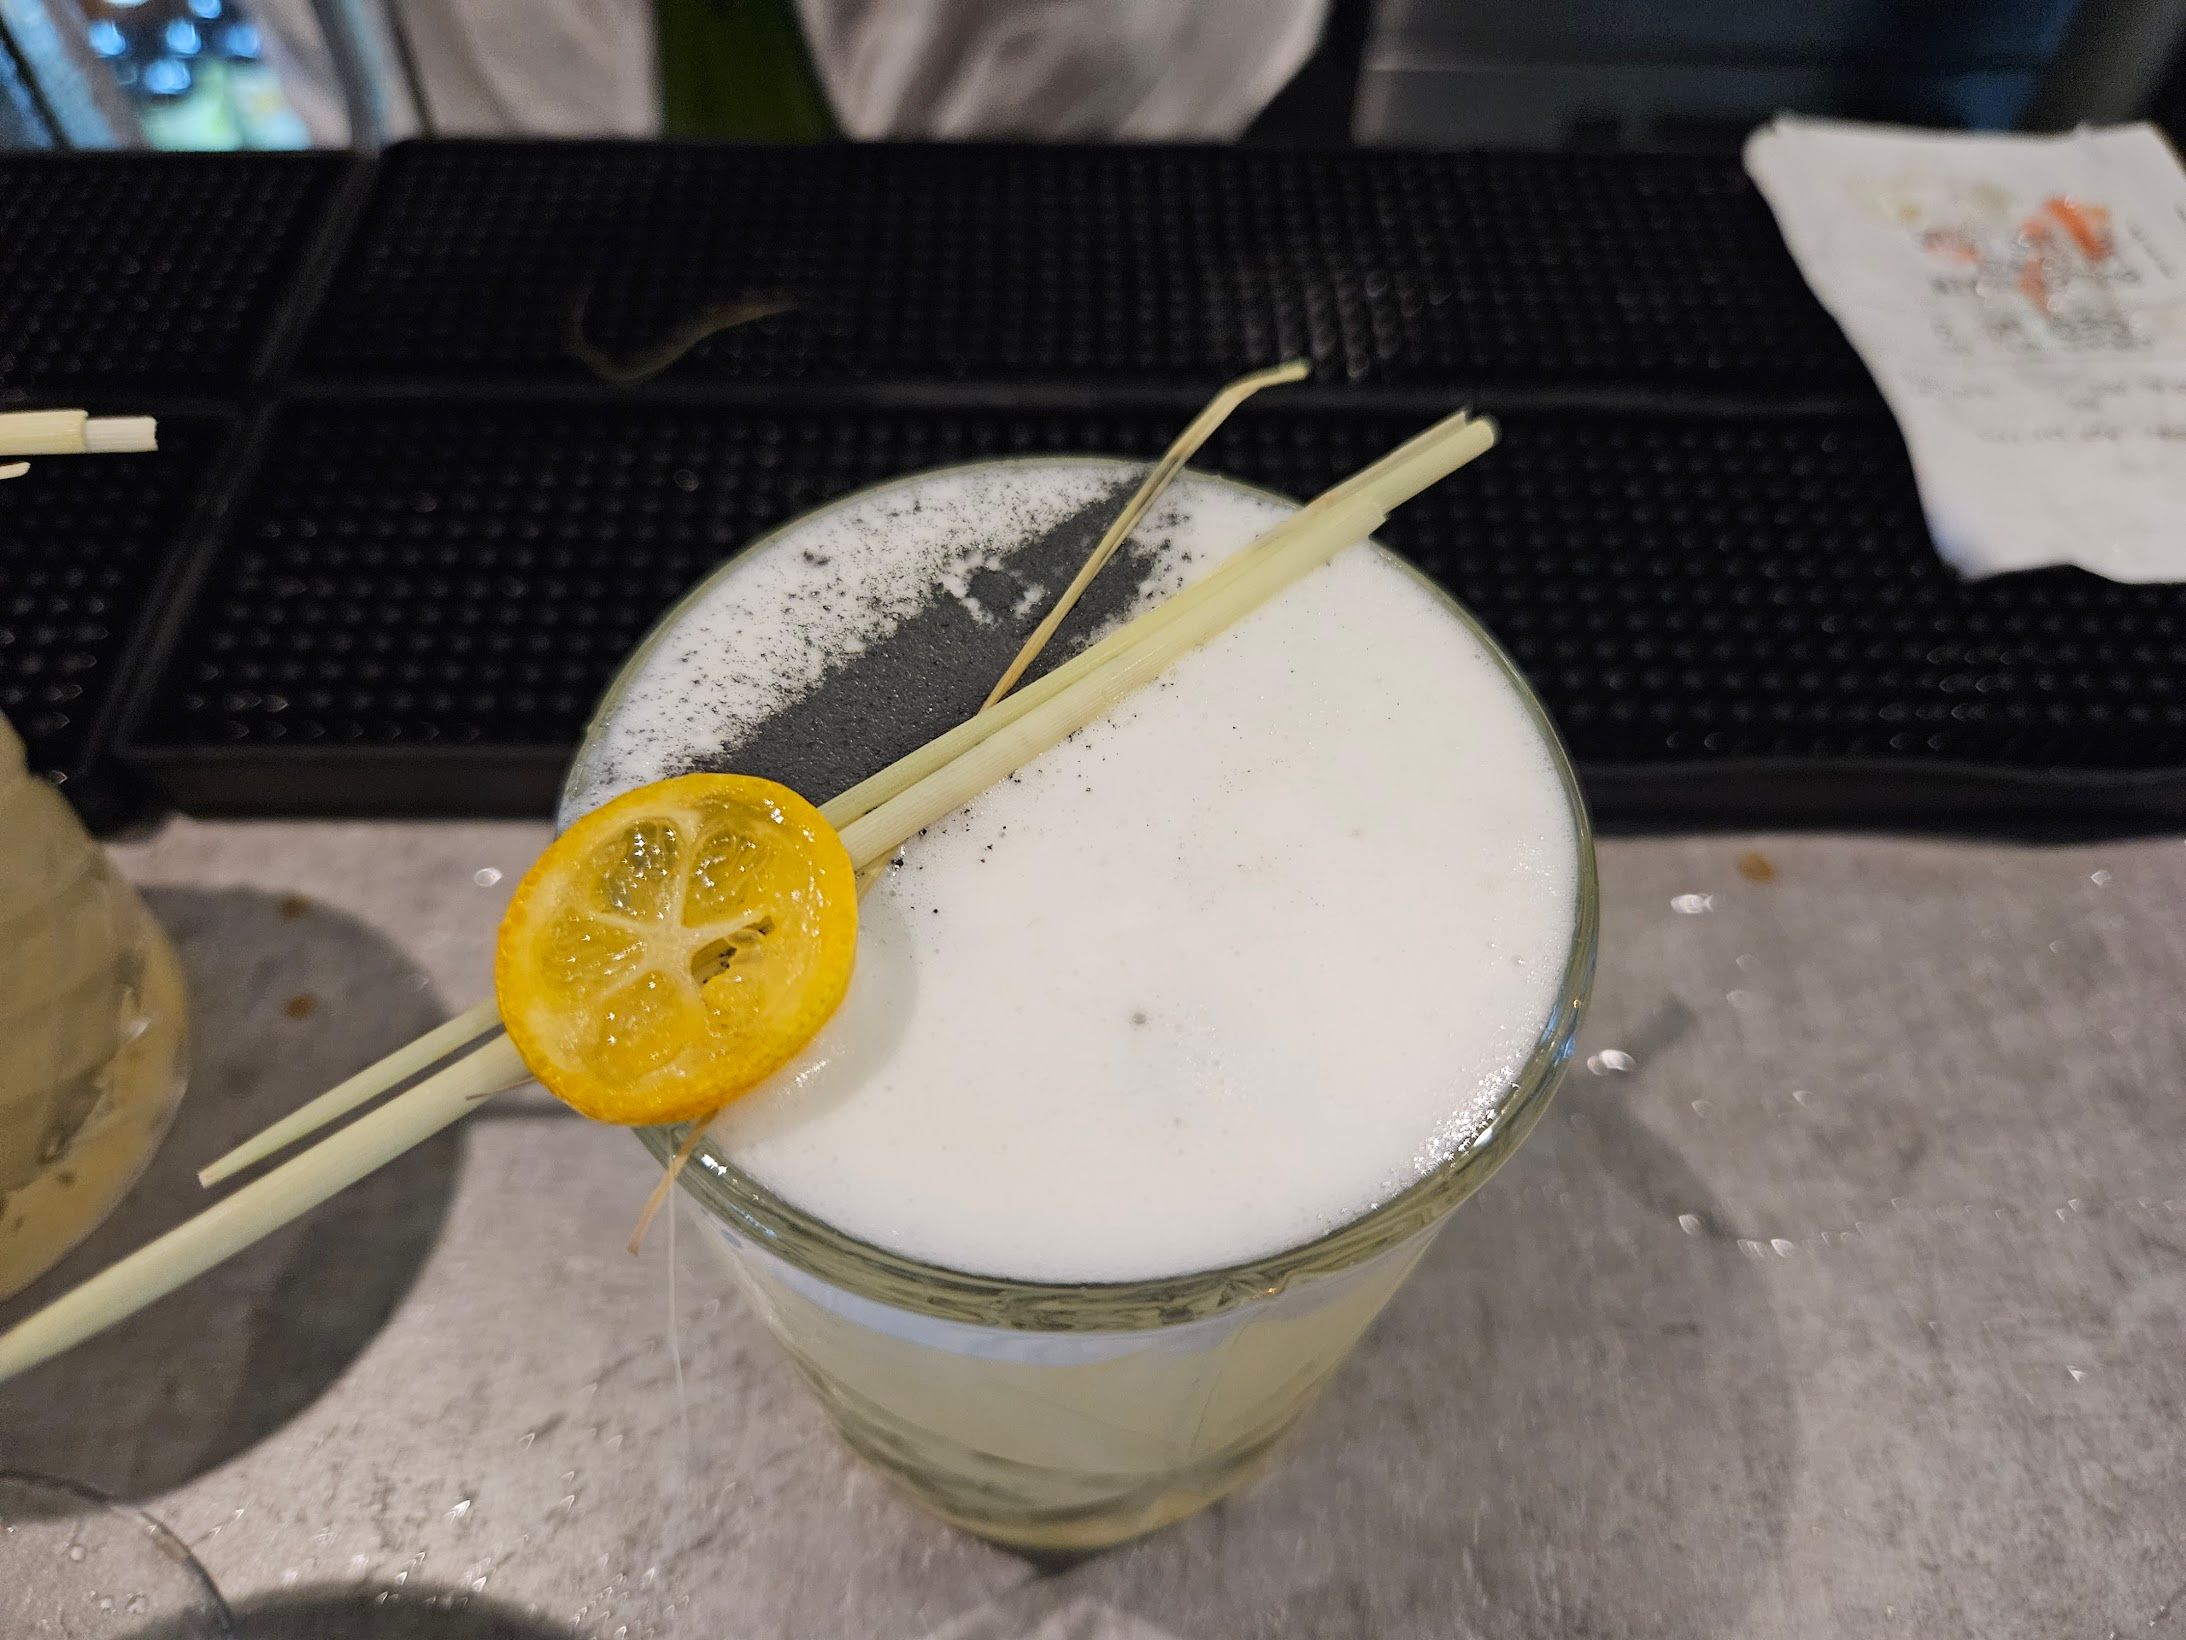 The Lucky Ko cocktail